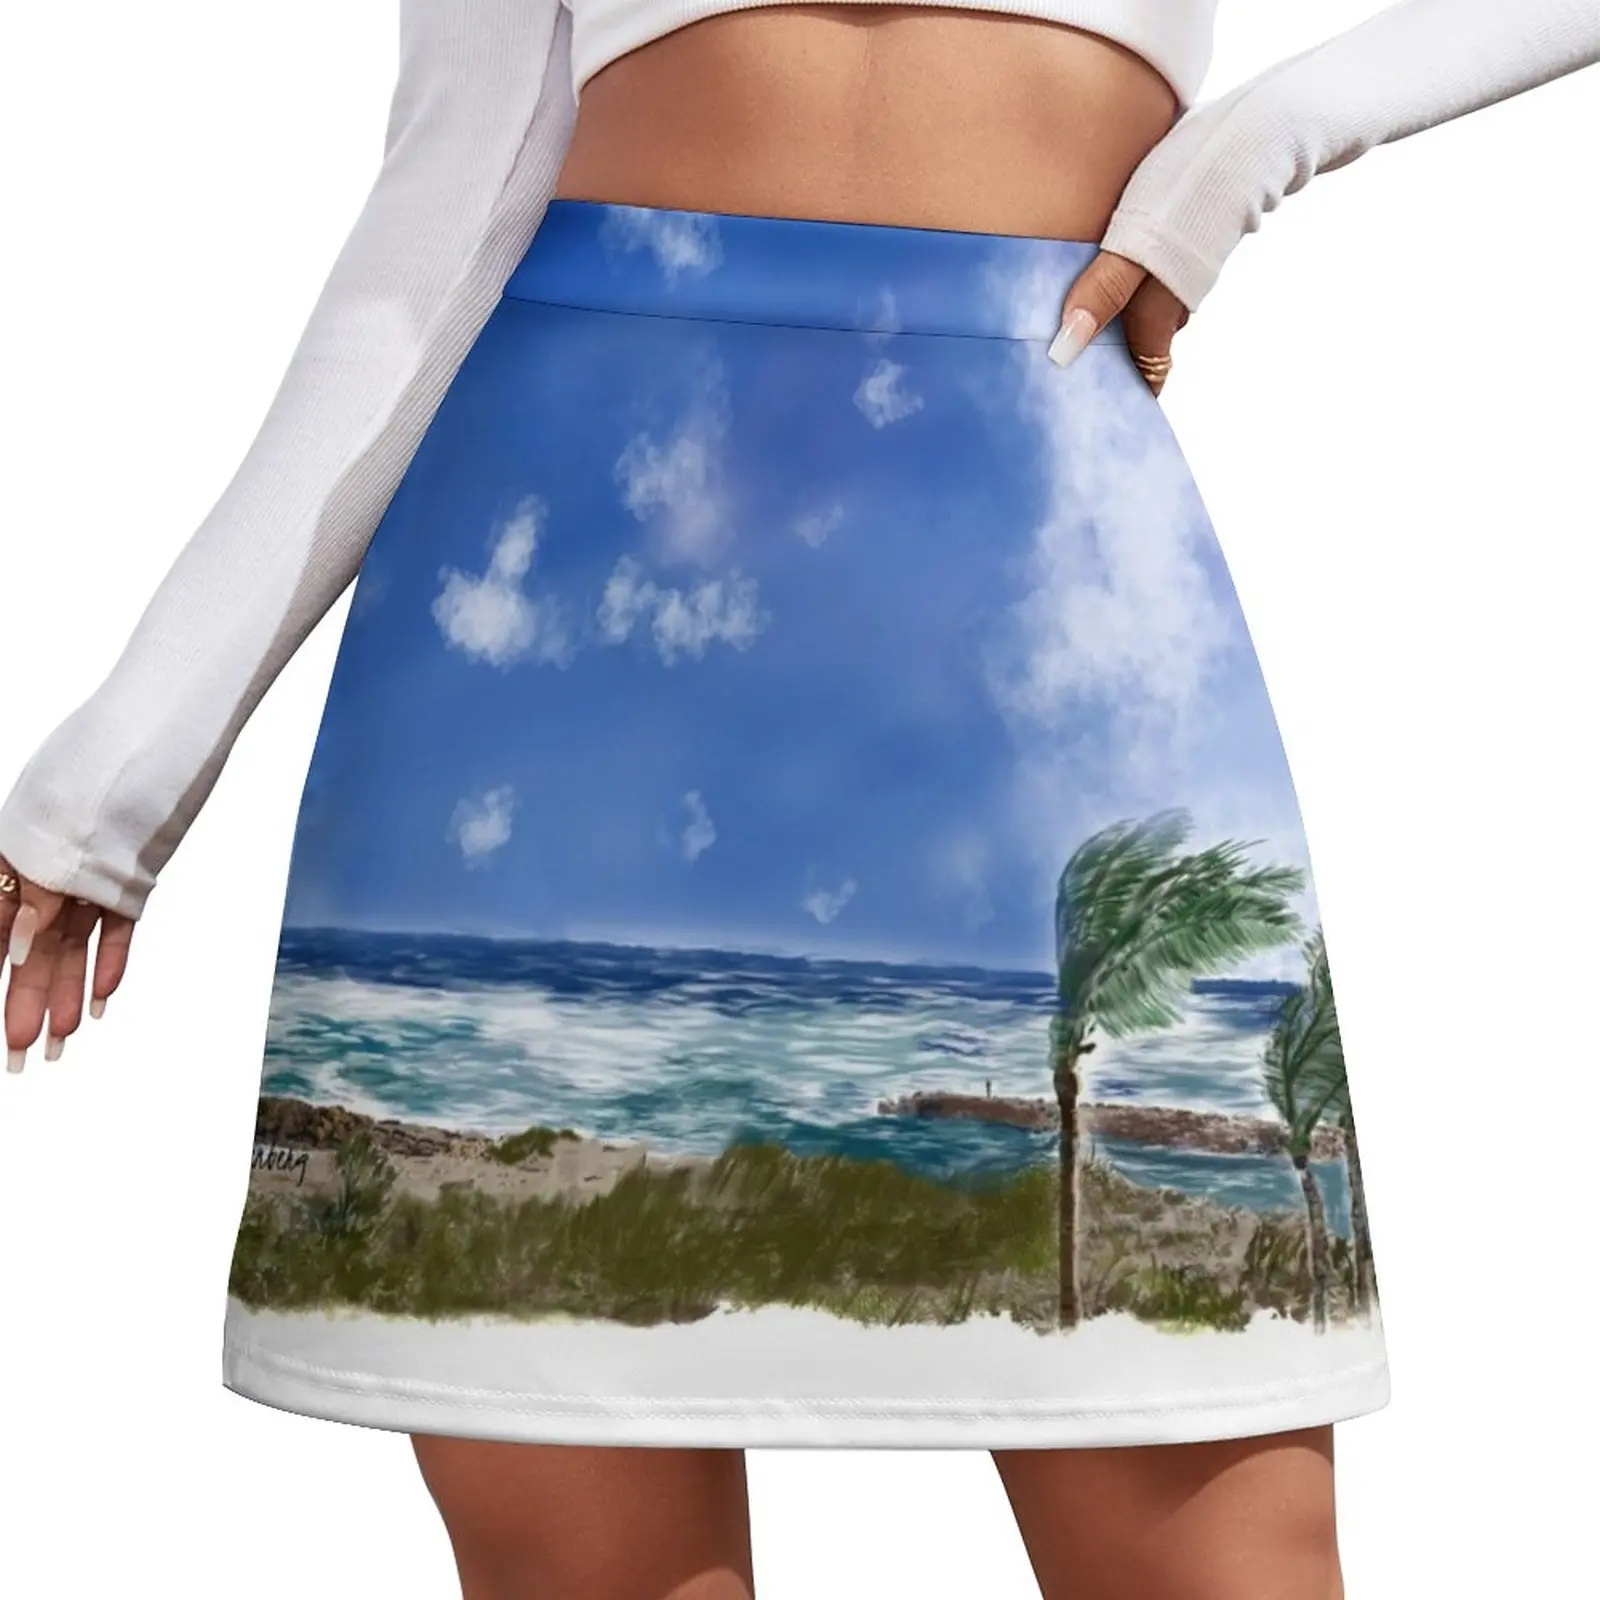 Palm Beach Mini Skirt skirts fashion Female dress short skirts for women